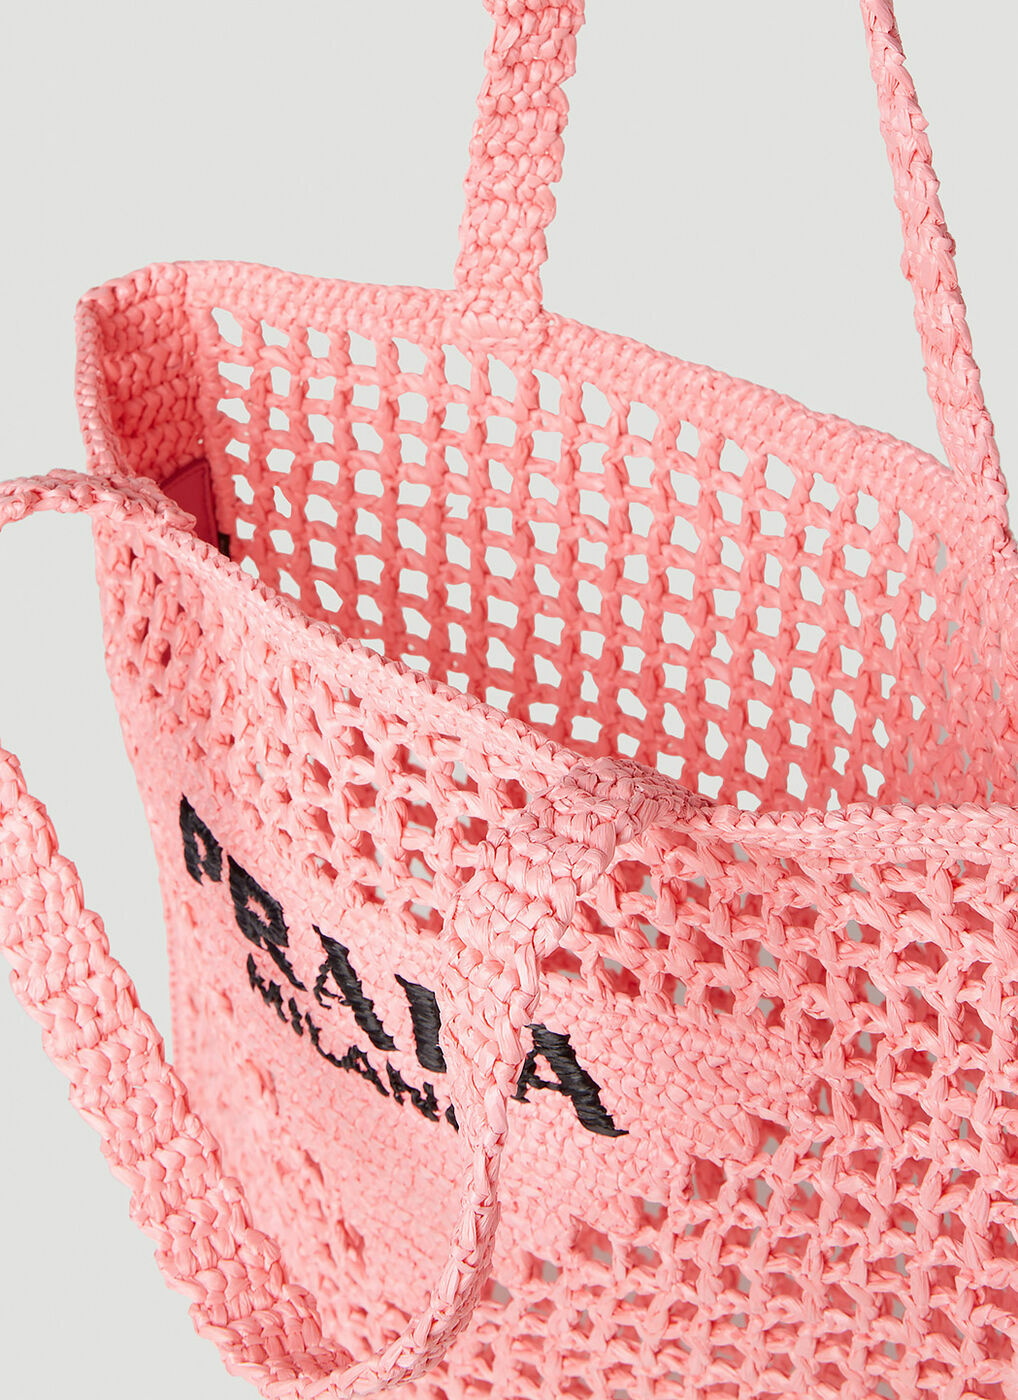 Prada Leather And Raffia Shoulder Bag in Pink